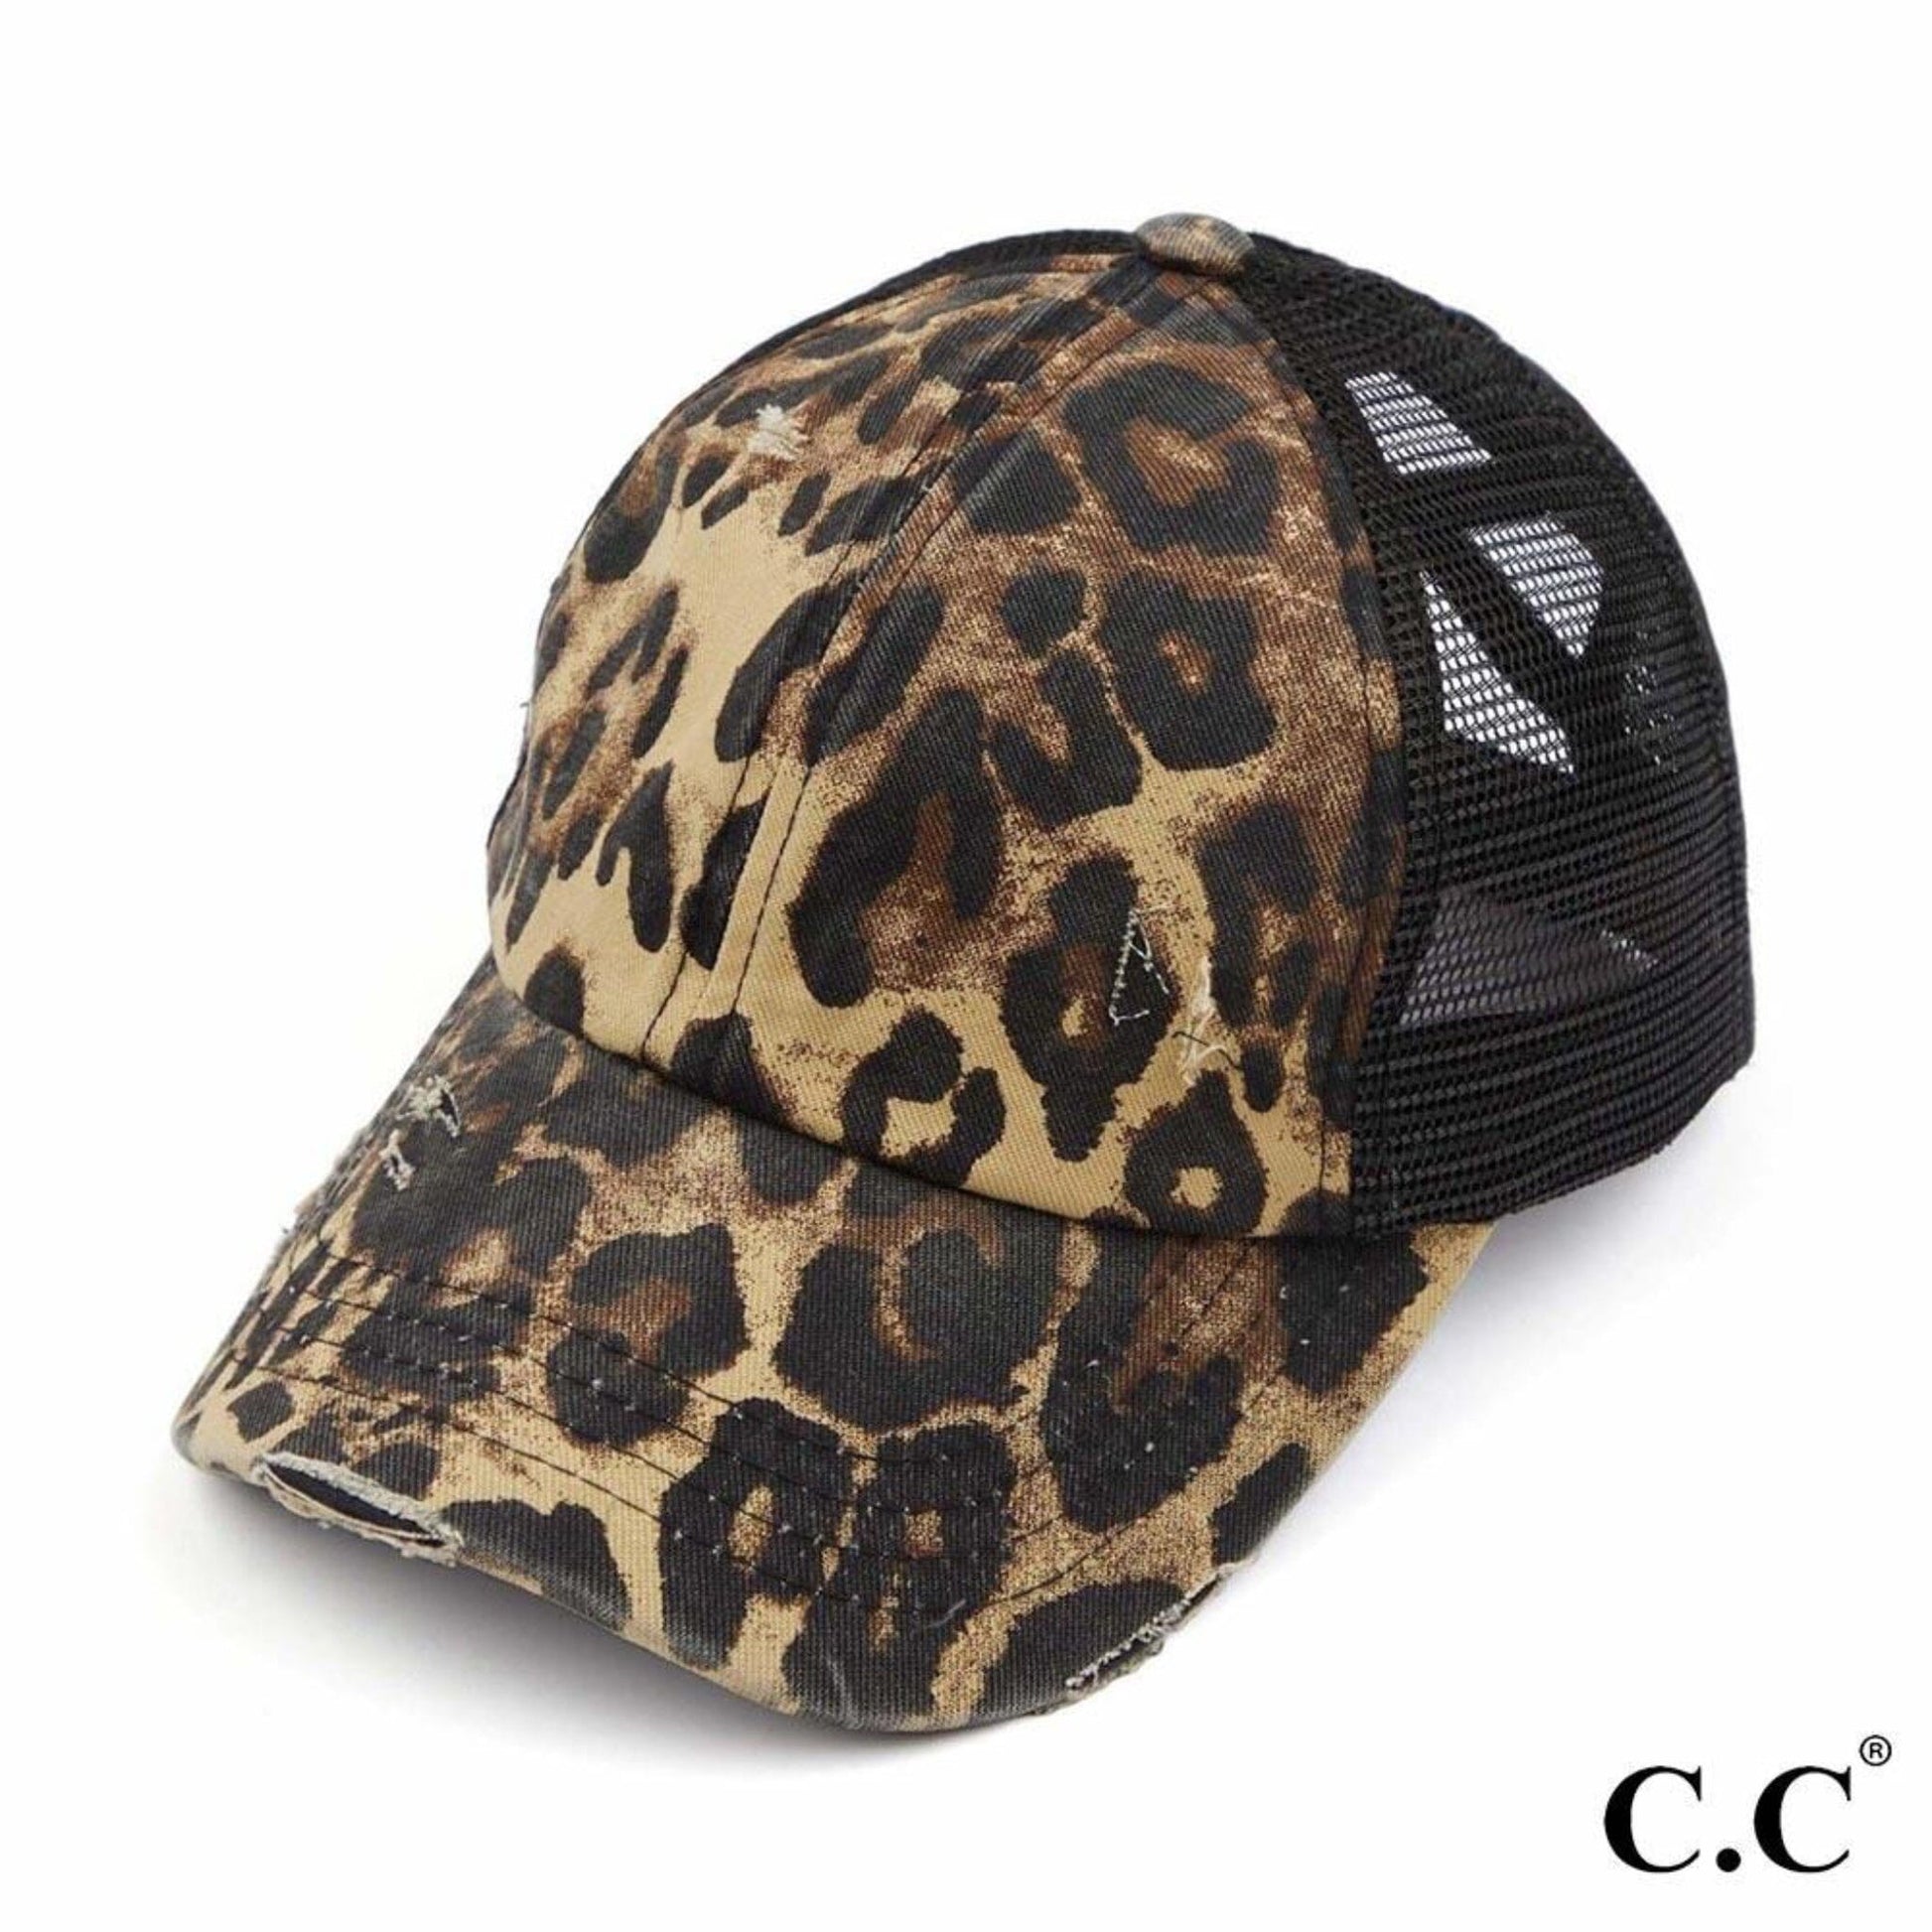 Leopard Print Criss-Cross Ponytail Cap CC Brand Ponytail Baseball Cap Judson 